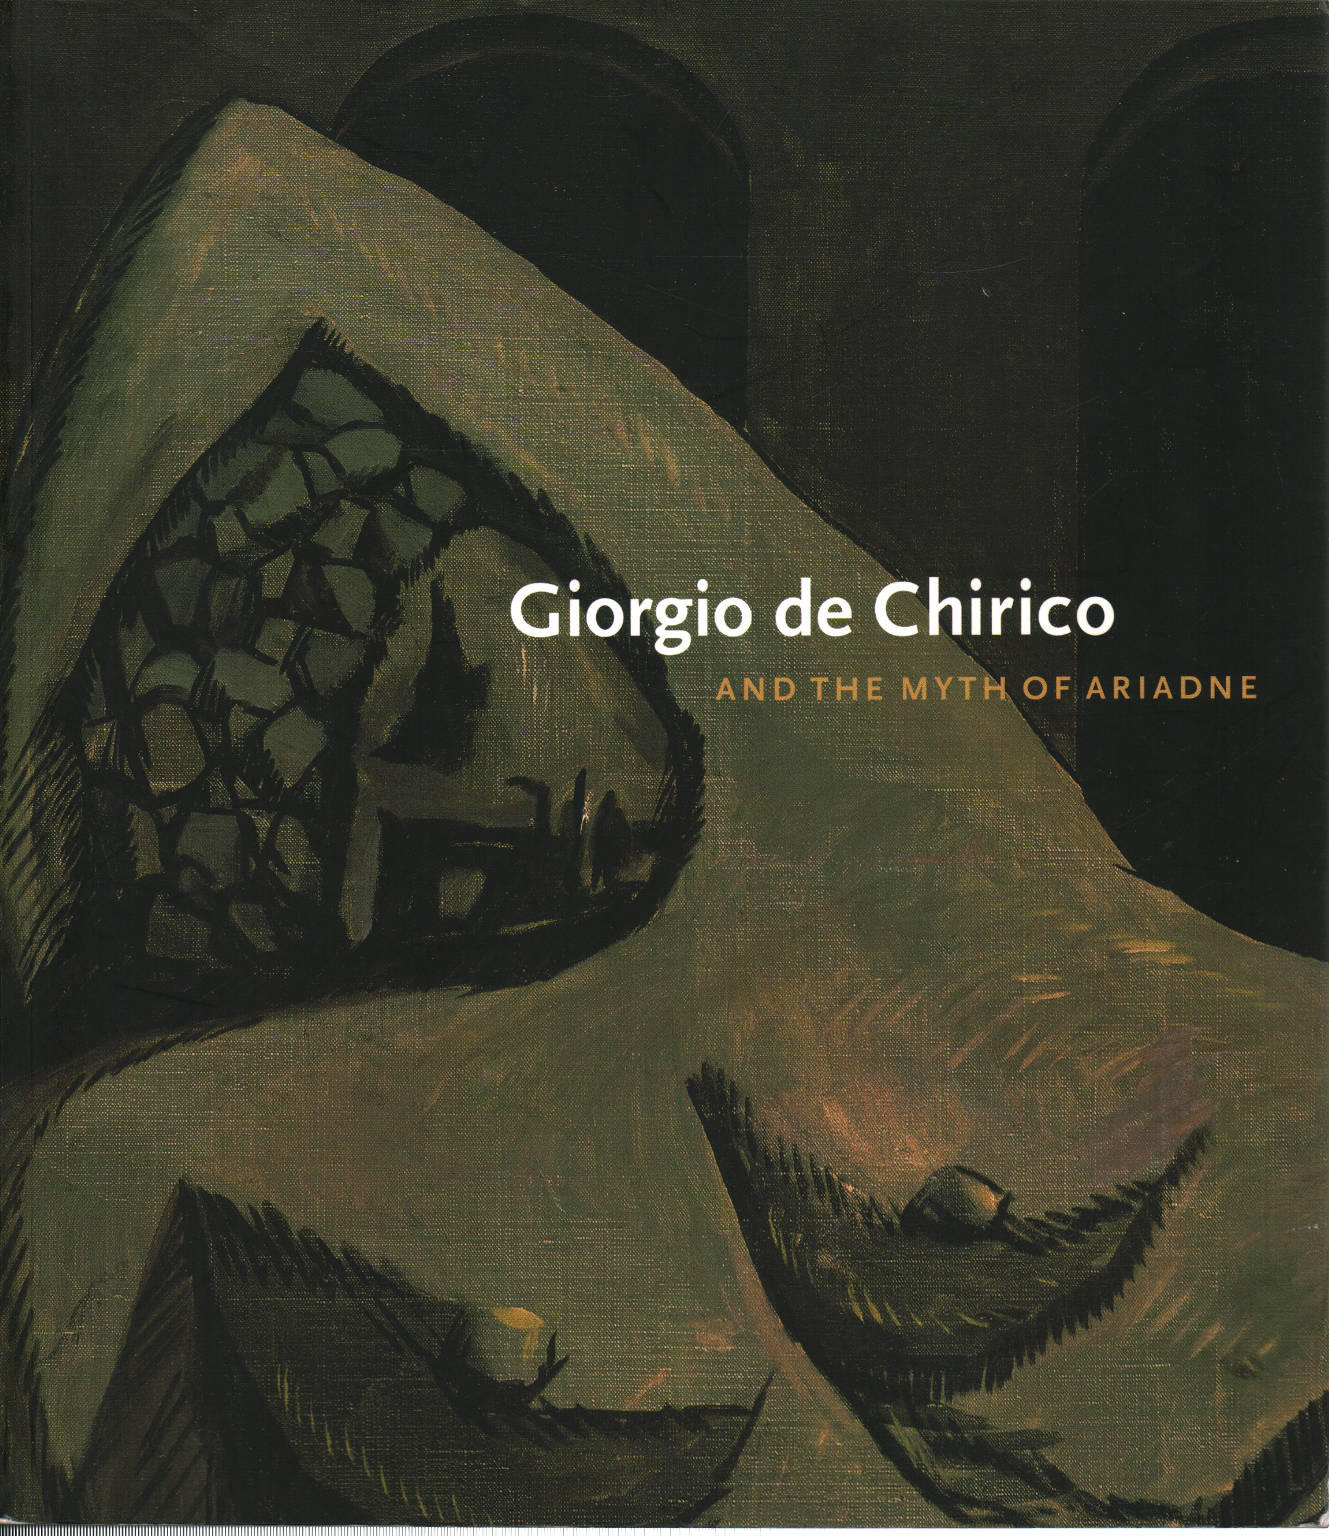 Giorgio de Chirico and the myth of Ariadne, Michael R. Taylor